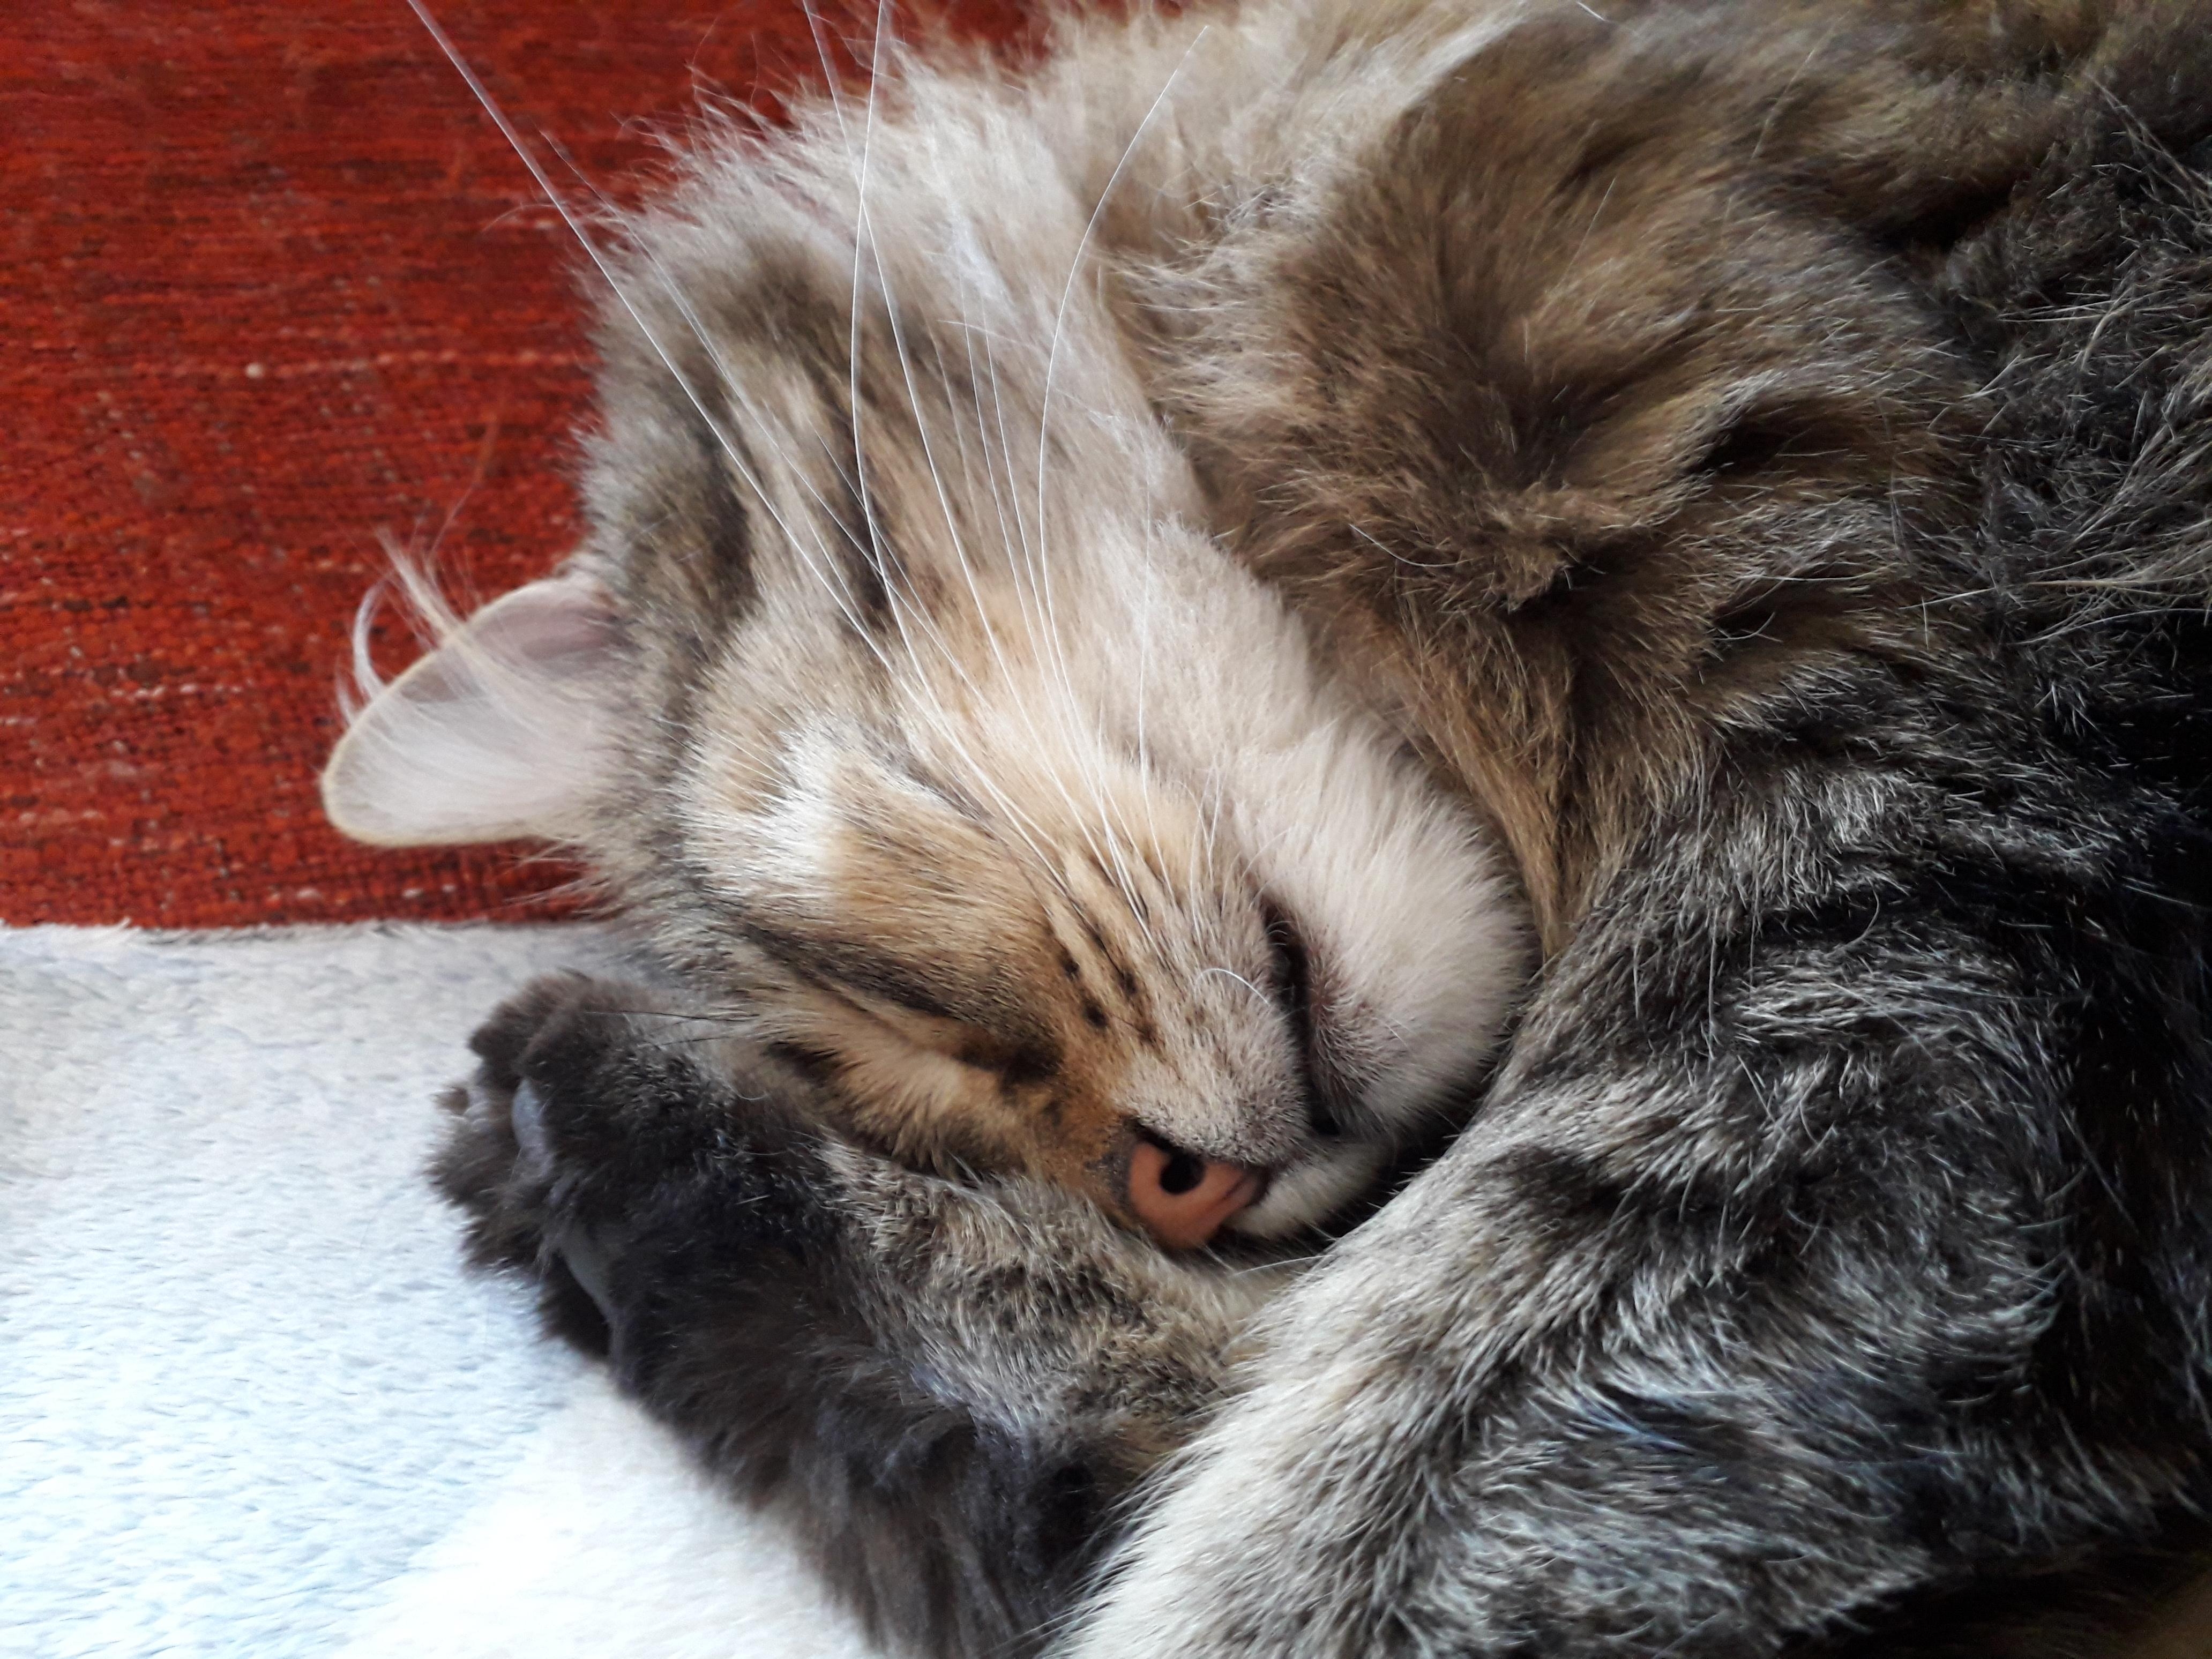 Schlafwetter...🌧☔🌧🌡
#Katze #Kater #Janosch #müde #catcontent #rescuecat